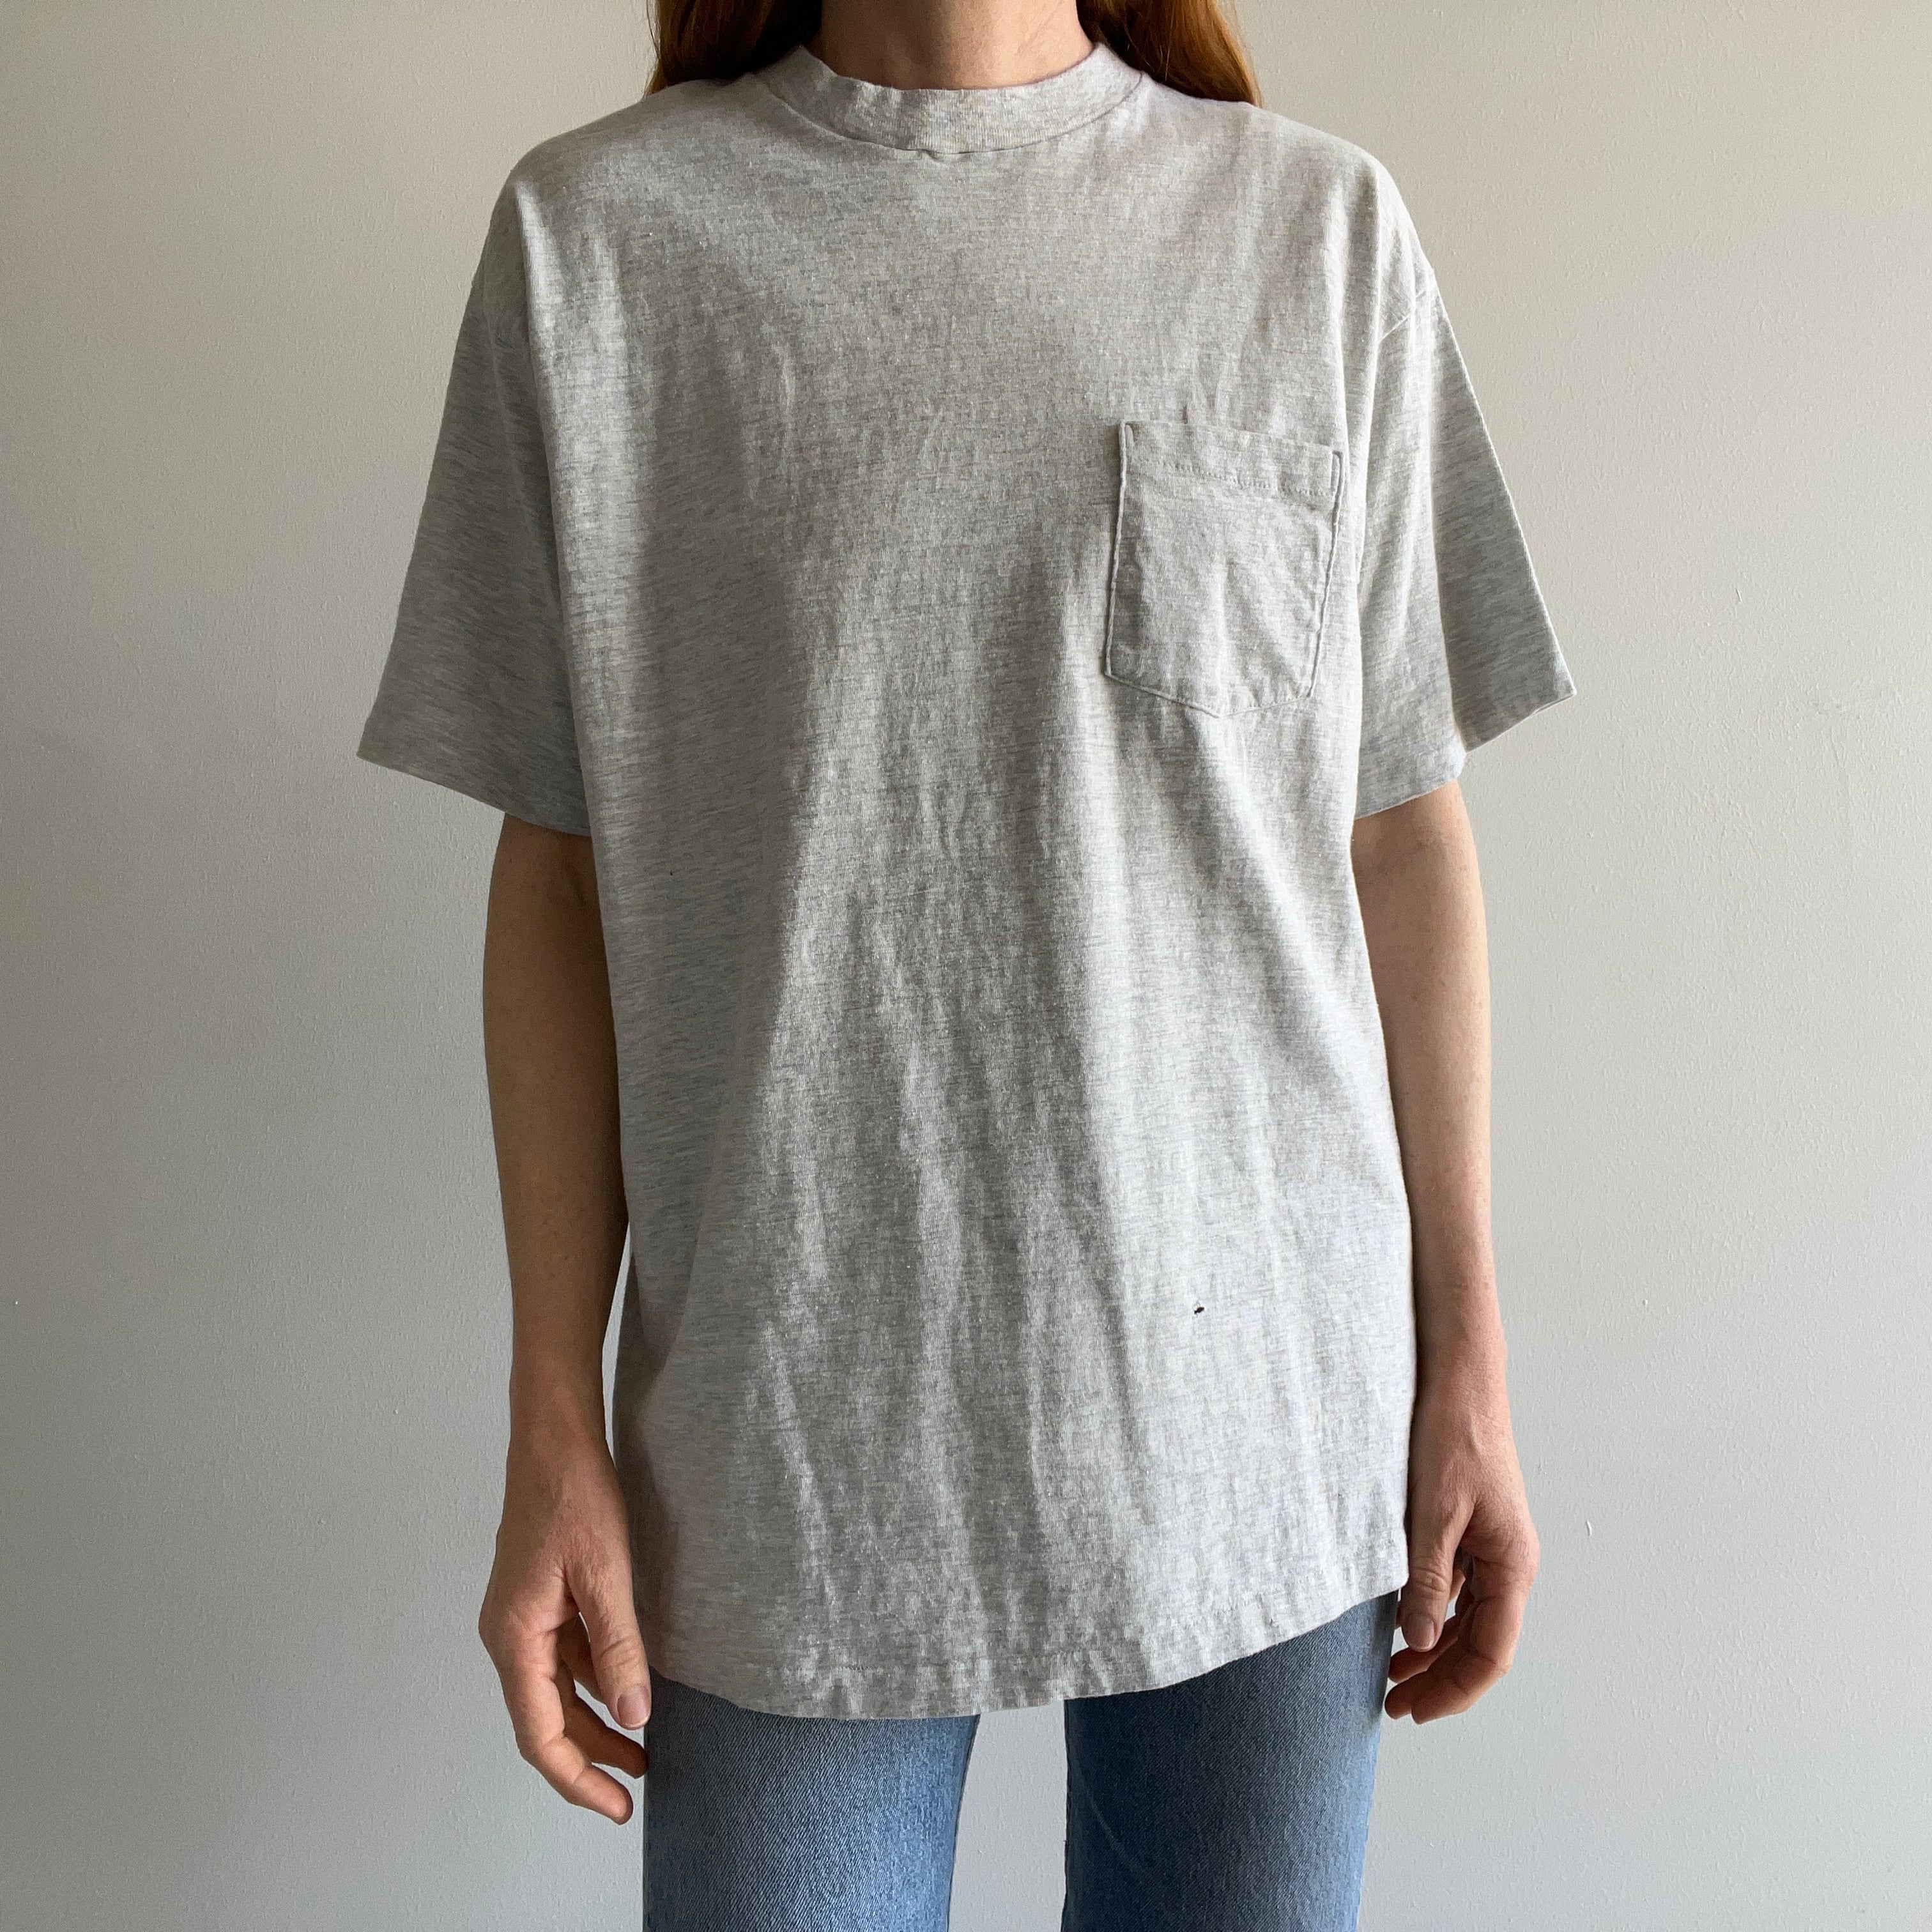 1980s Blank Gray Pocket T-Shirt by Delta